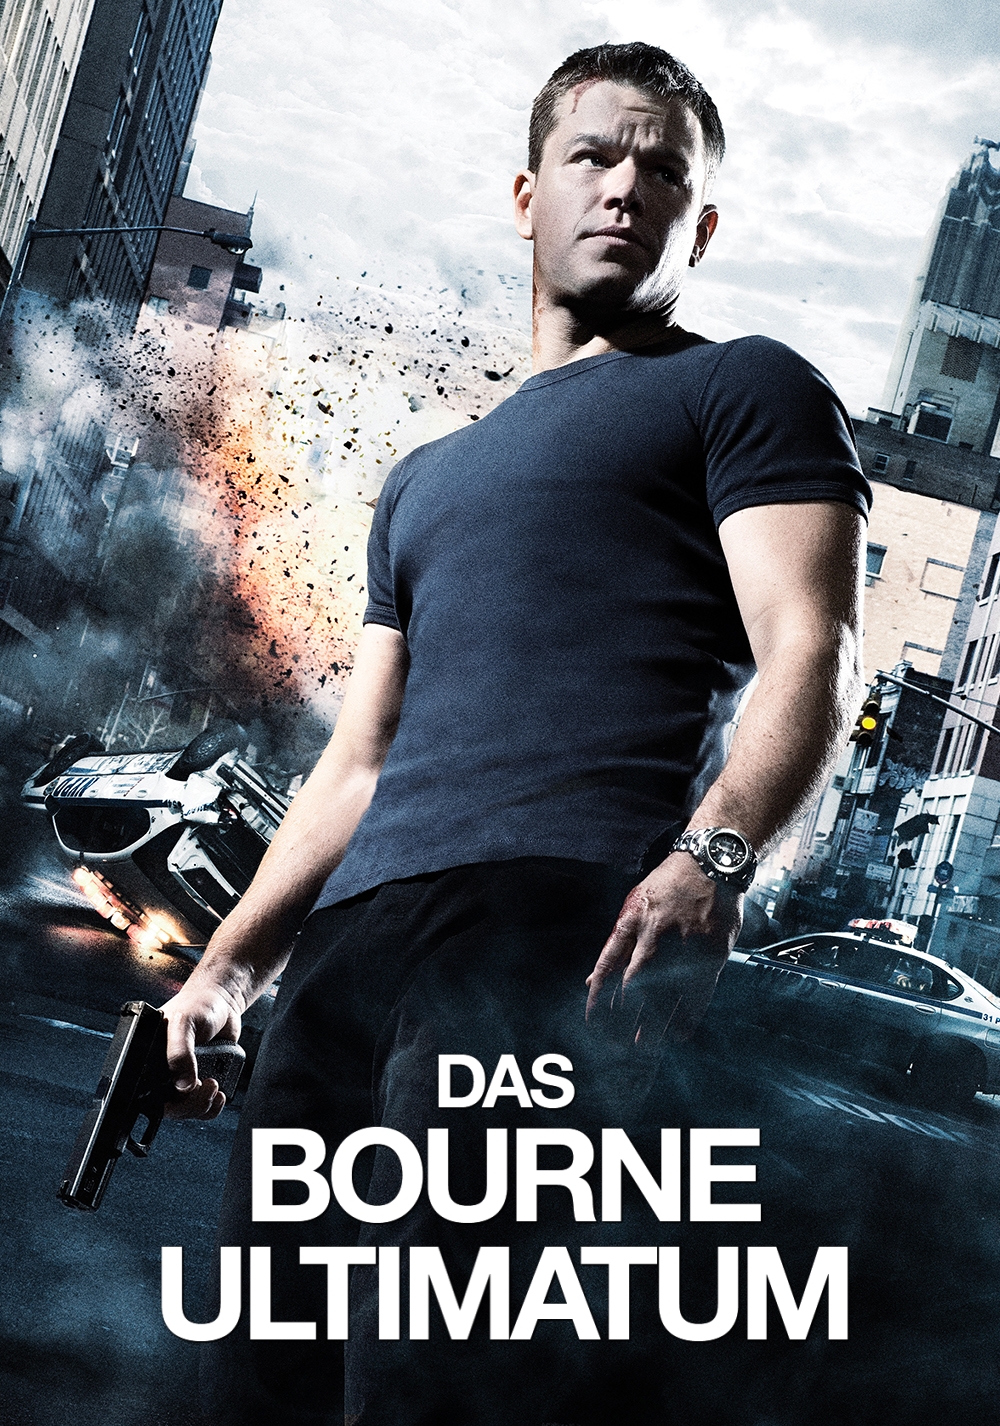 The Bourne Ultimatum Art